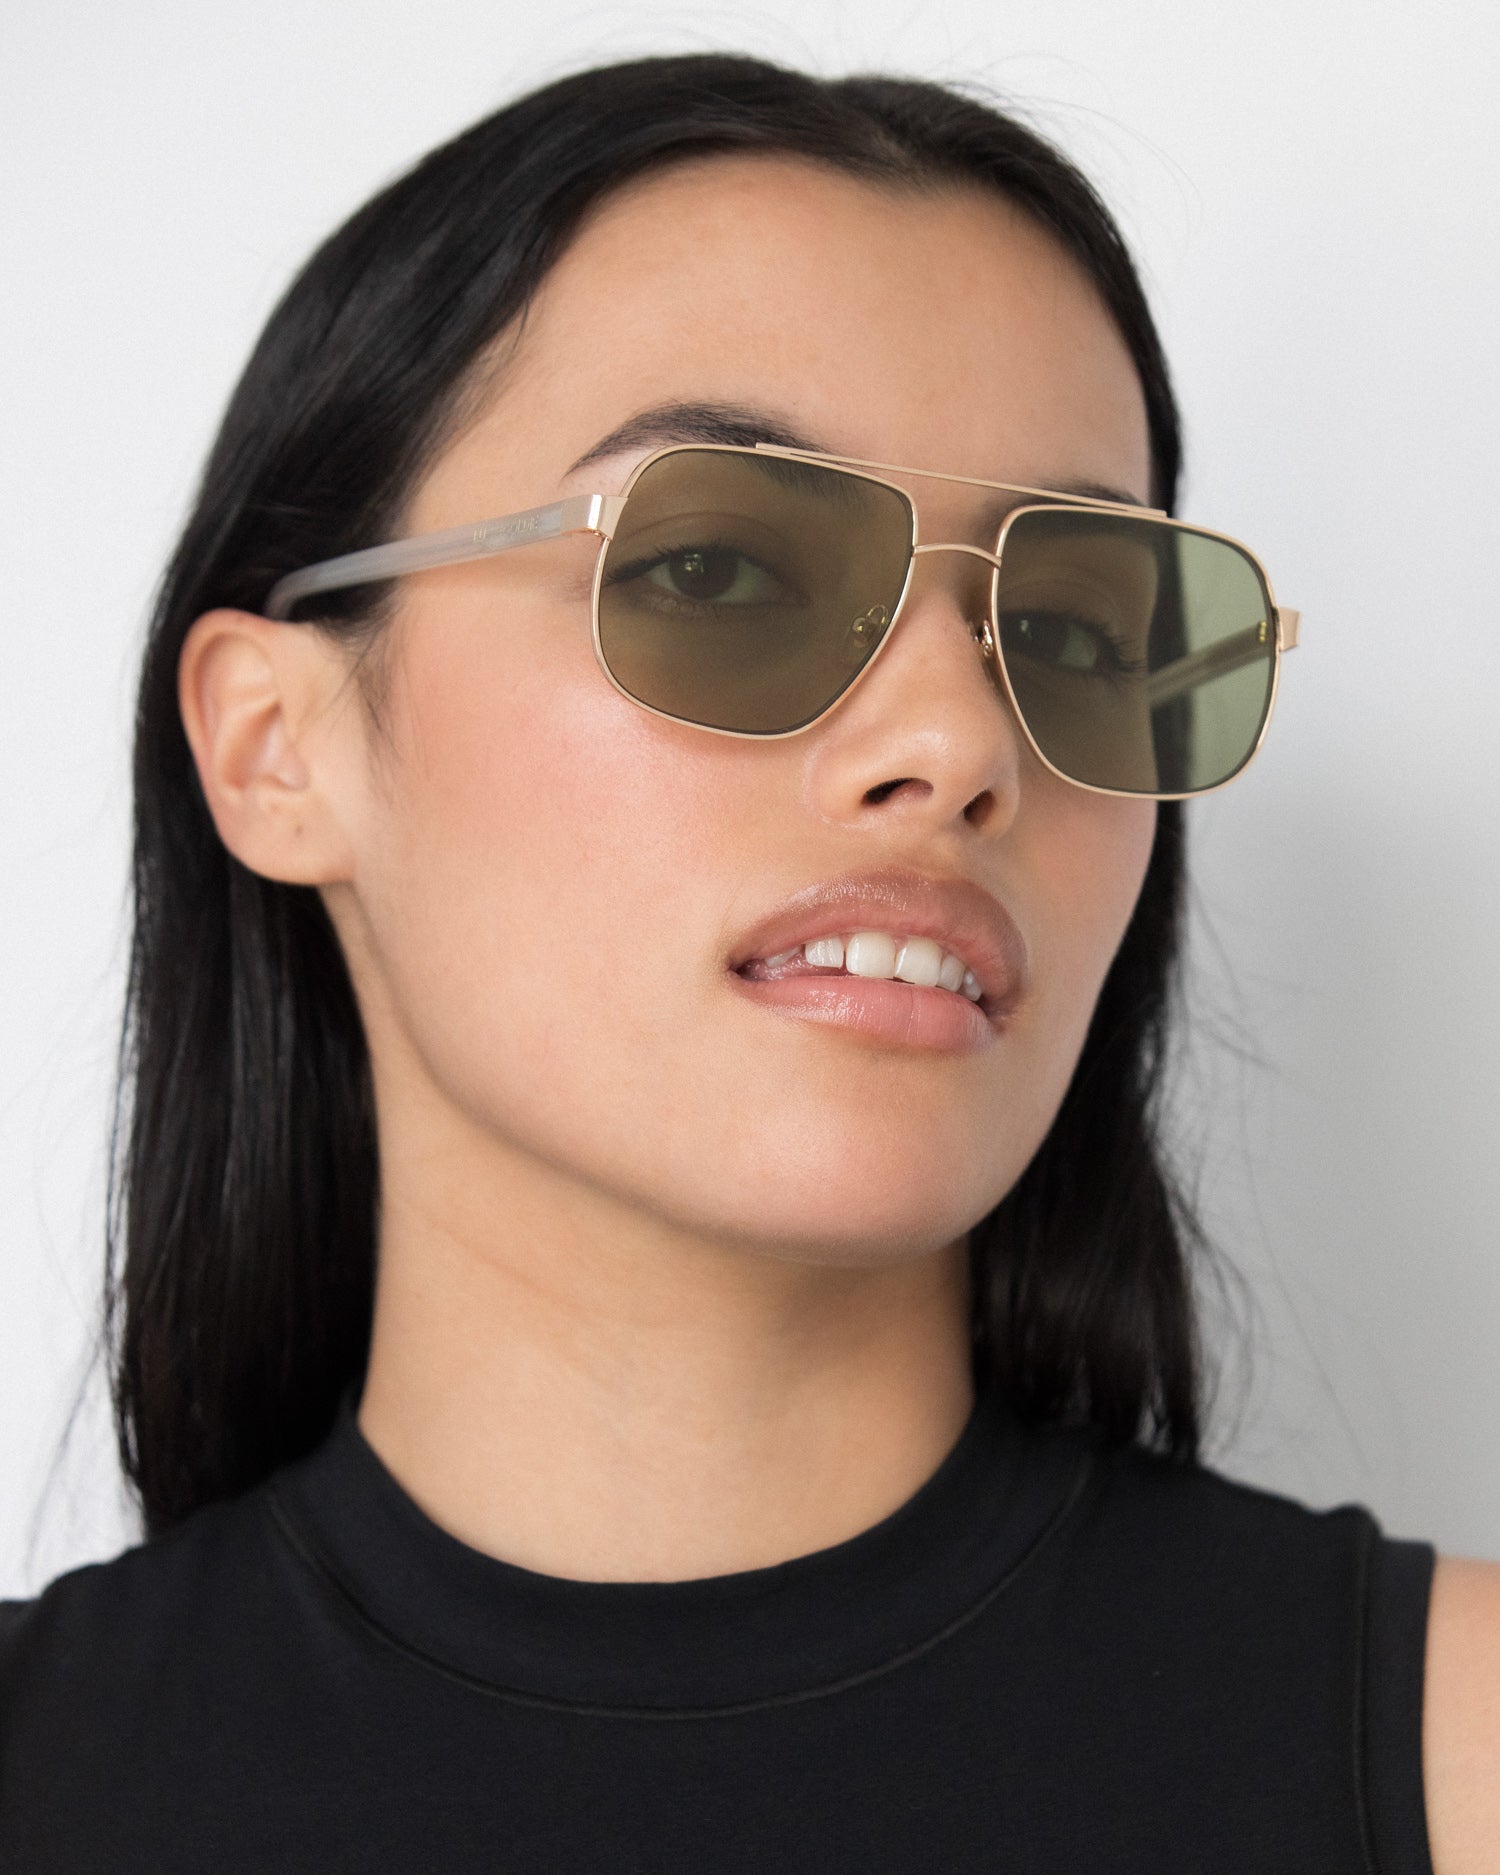 Amelia Sunglasses in Jelly by LU GOLDIE Eyewear